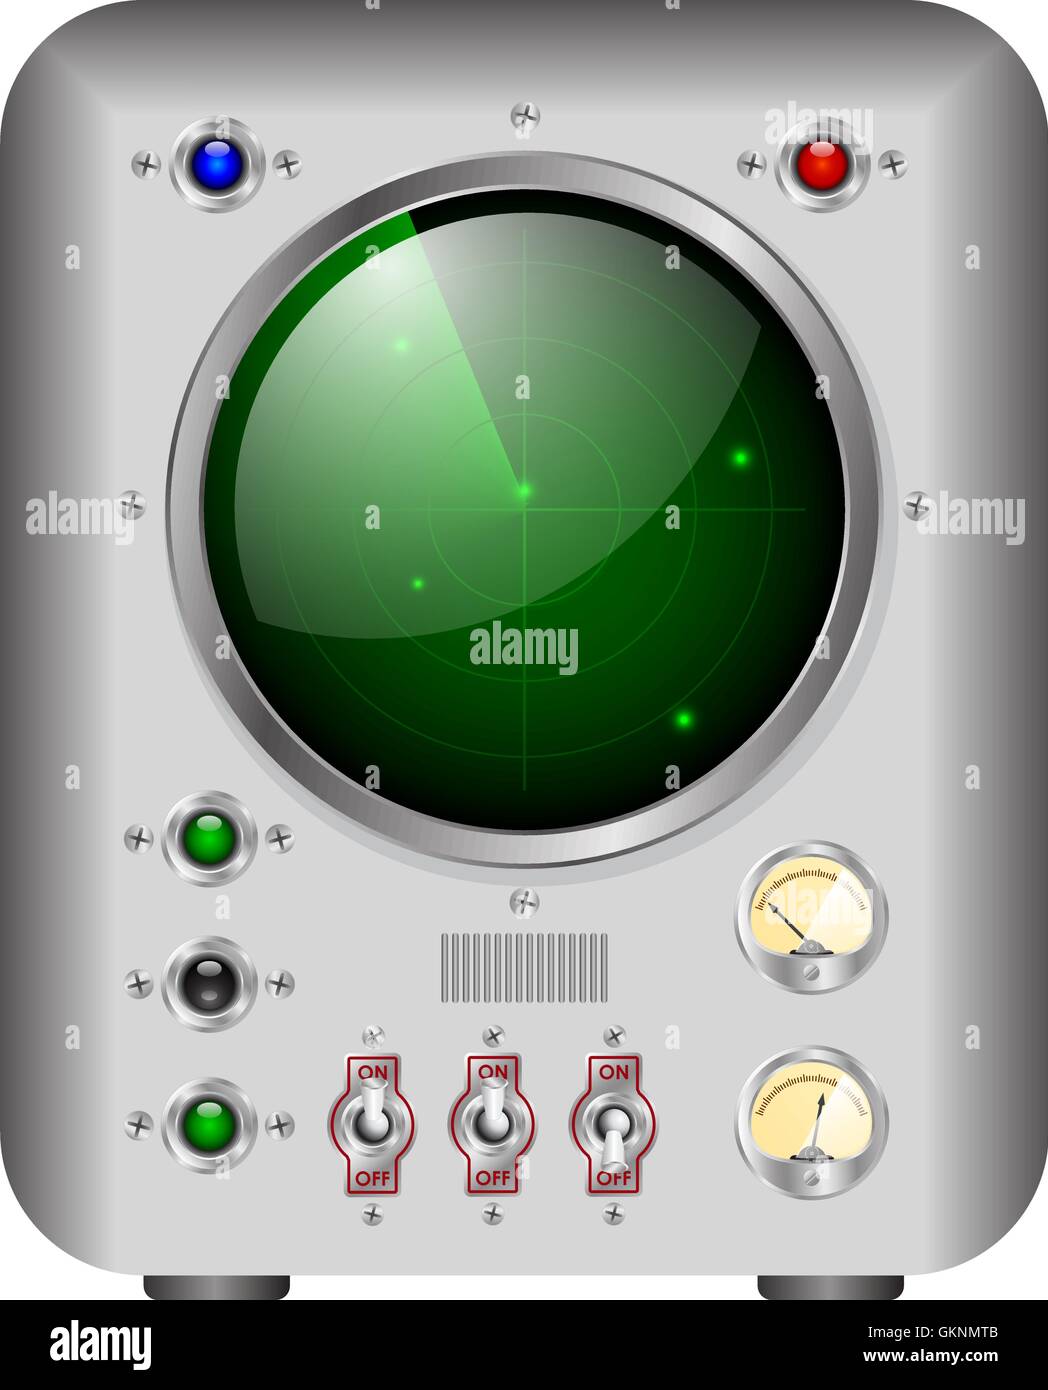 electronic device with a green screen similar to radar or oscilloscope Stock Vector